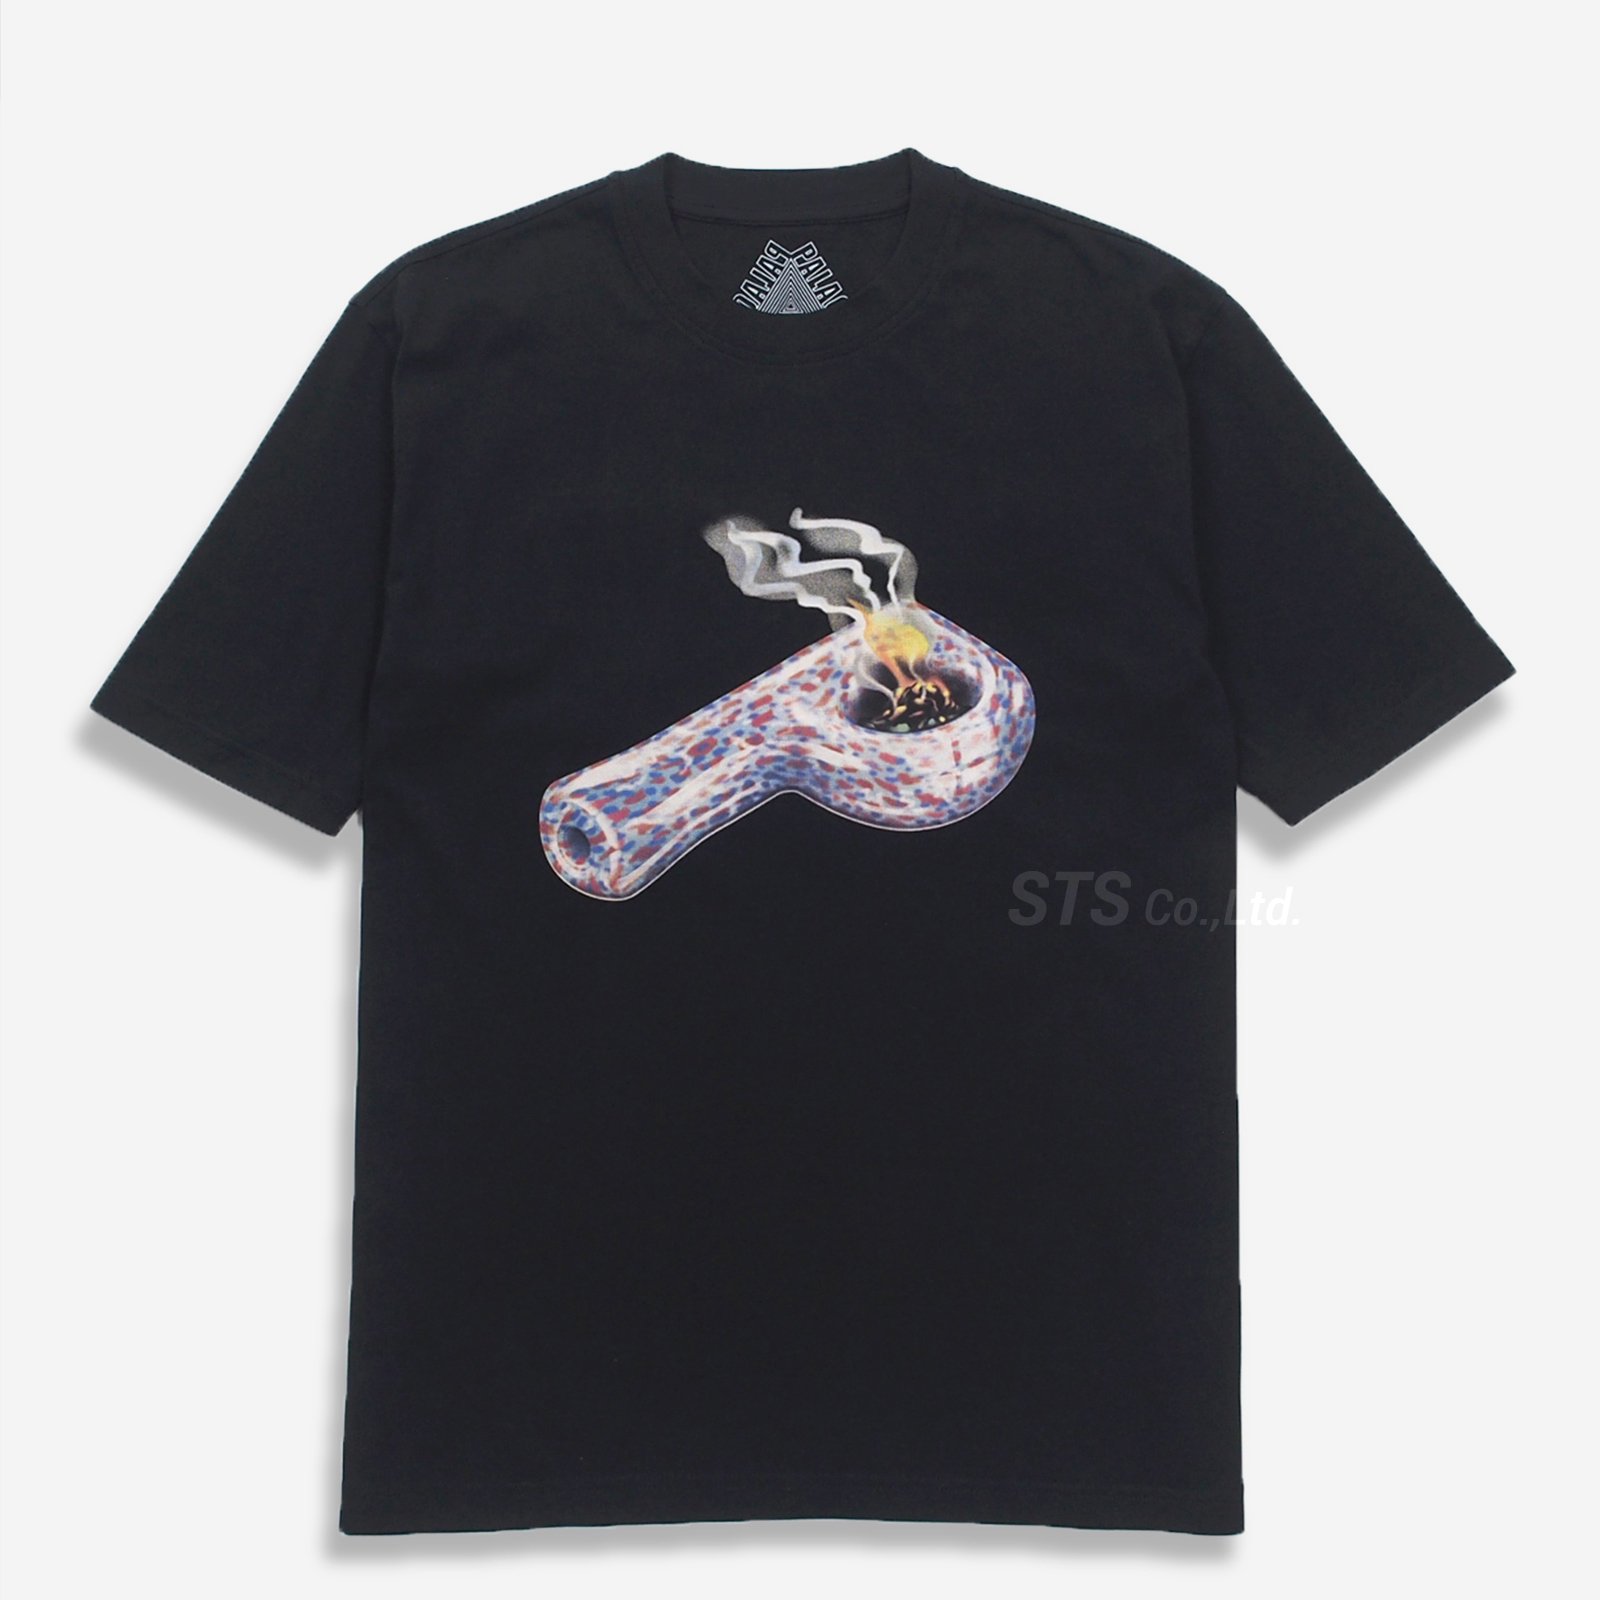 Palace Skateboards - Machine T-Shirt - UG.SHAFT